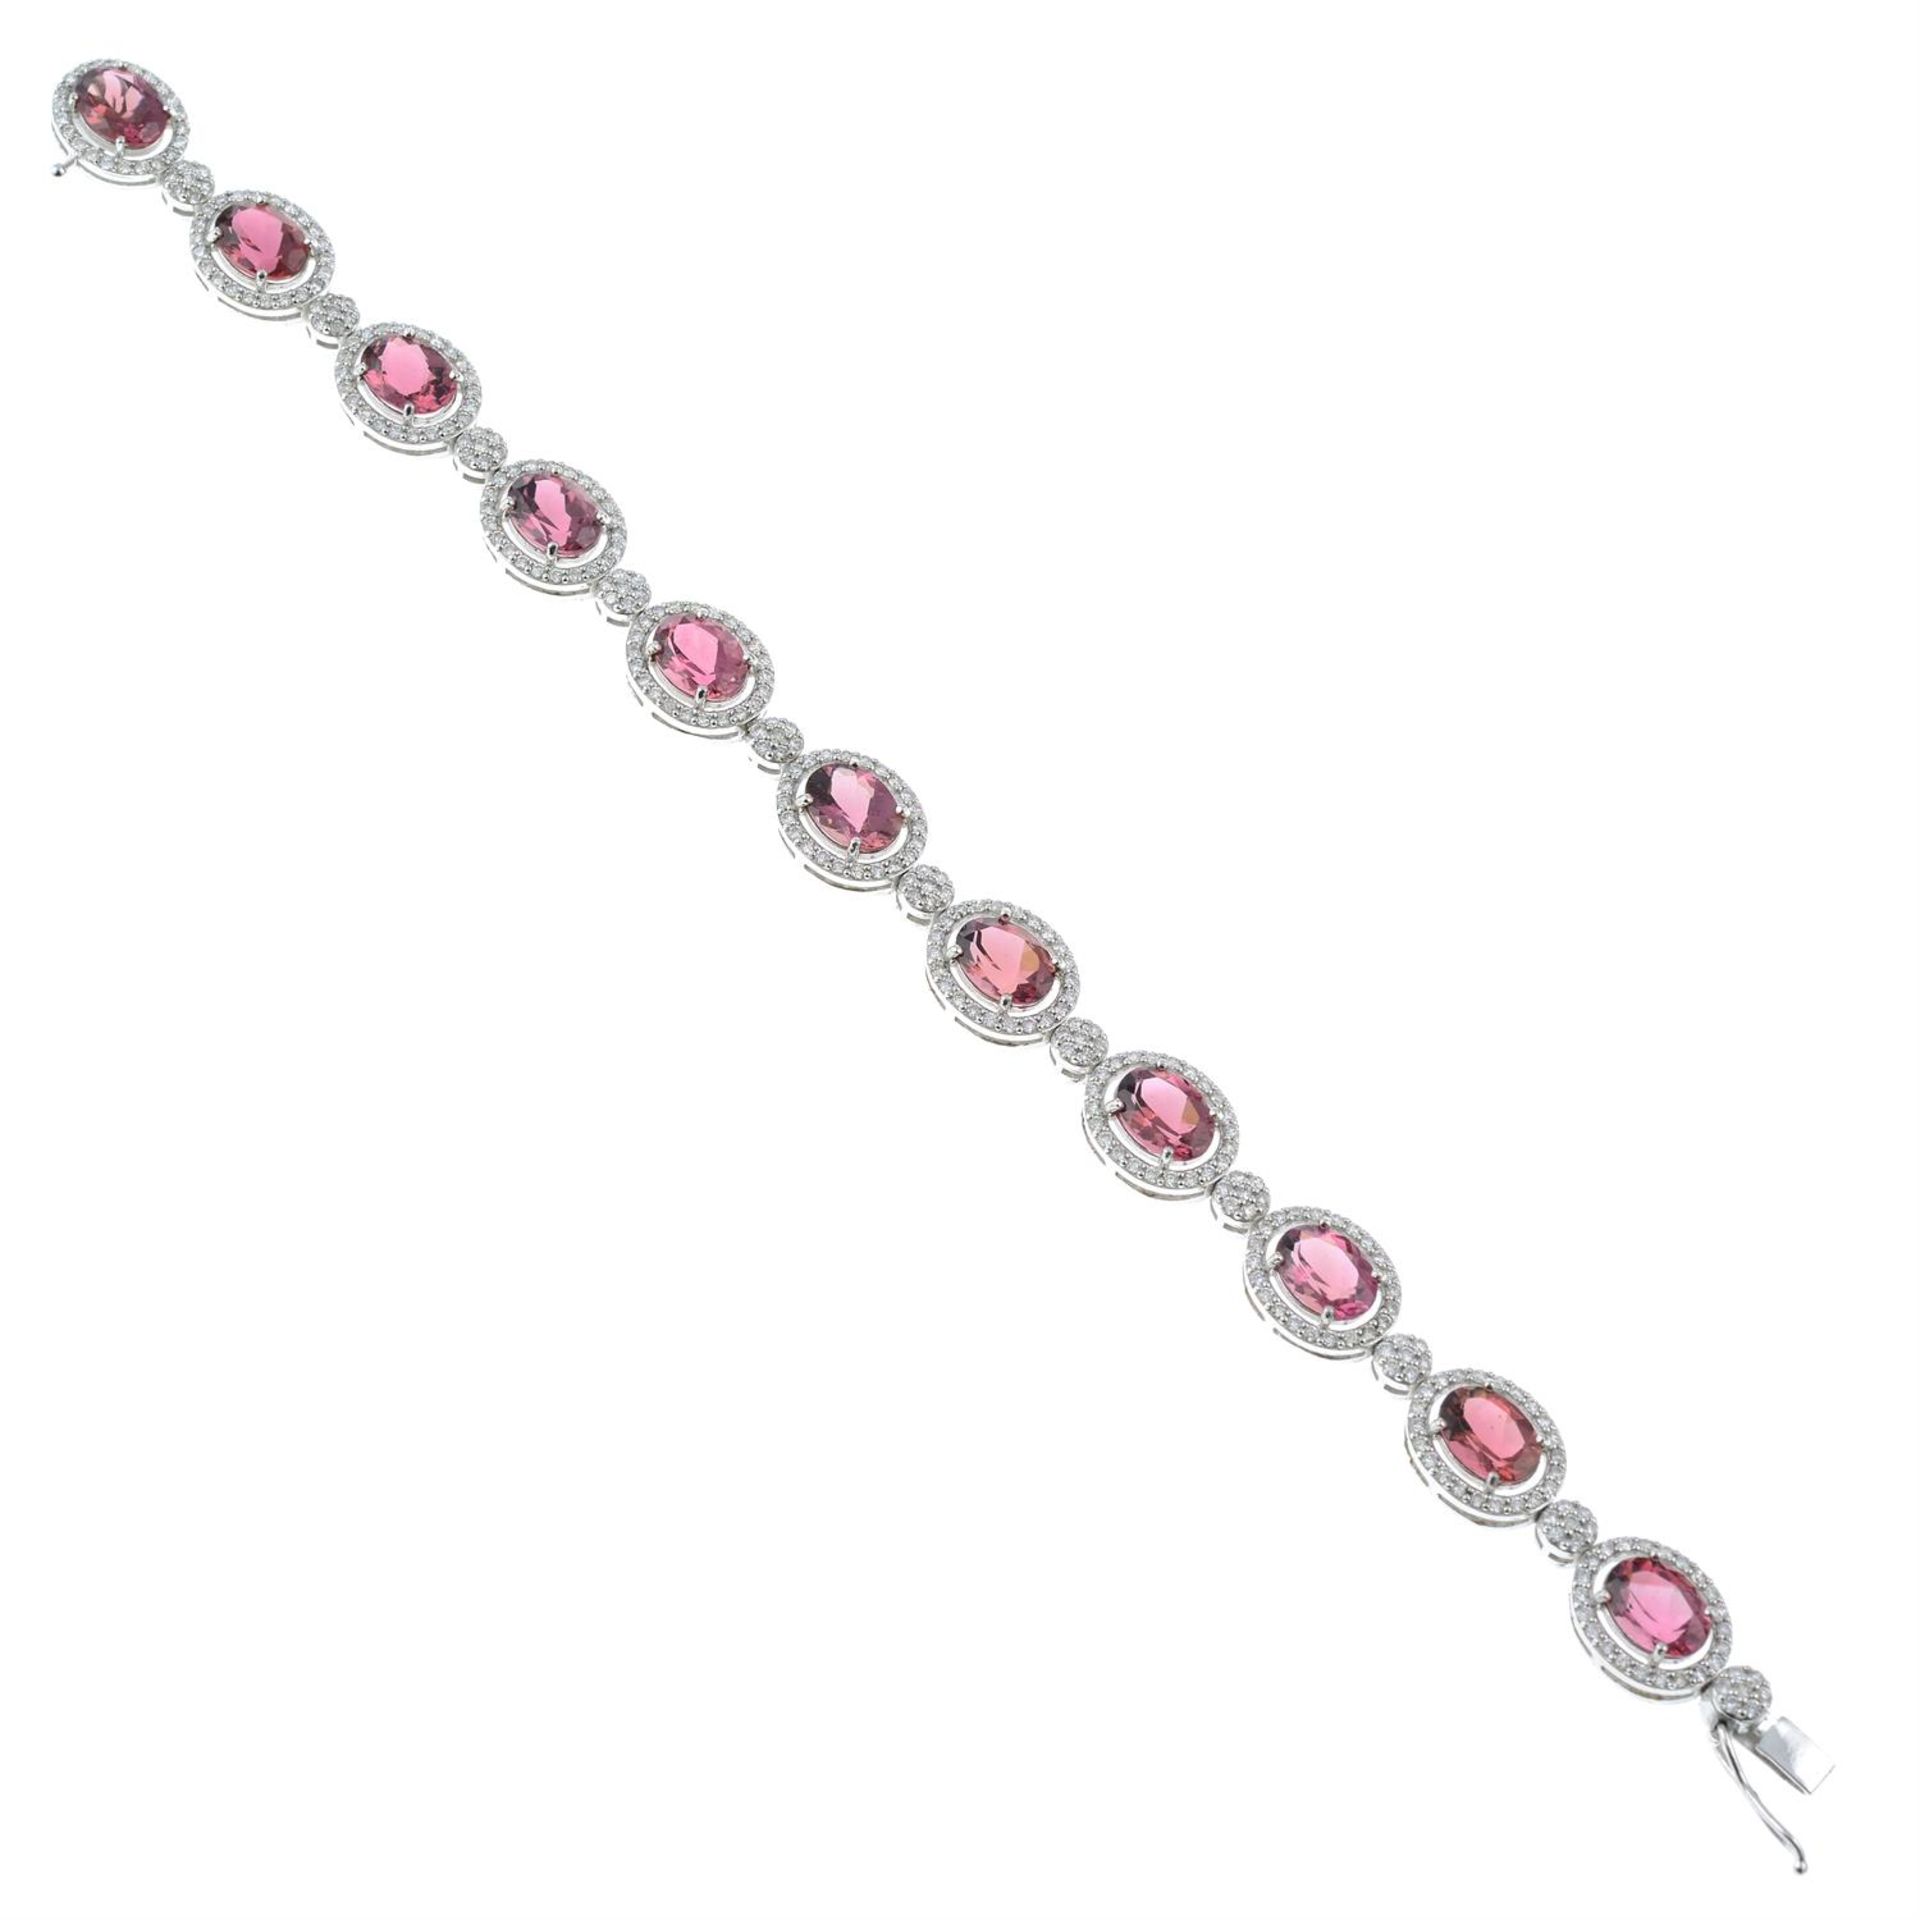 A pink tourmaline and diamond bracelet. - Image 3 of 4